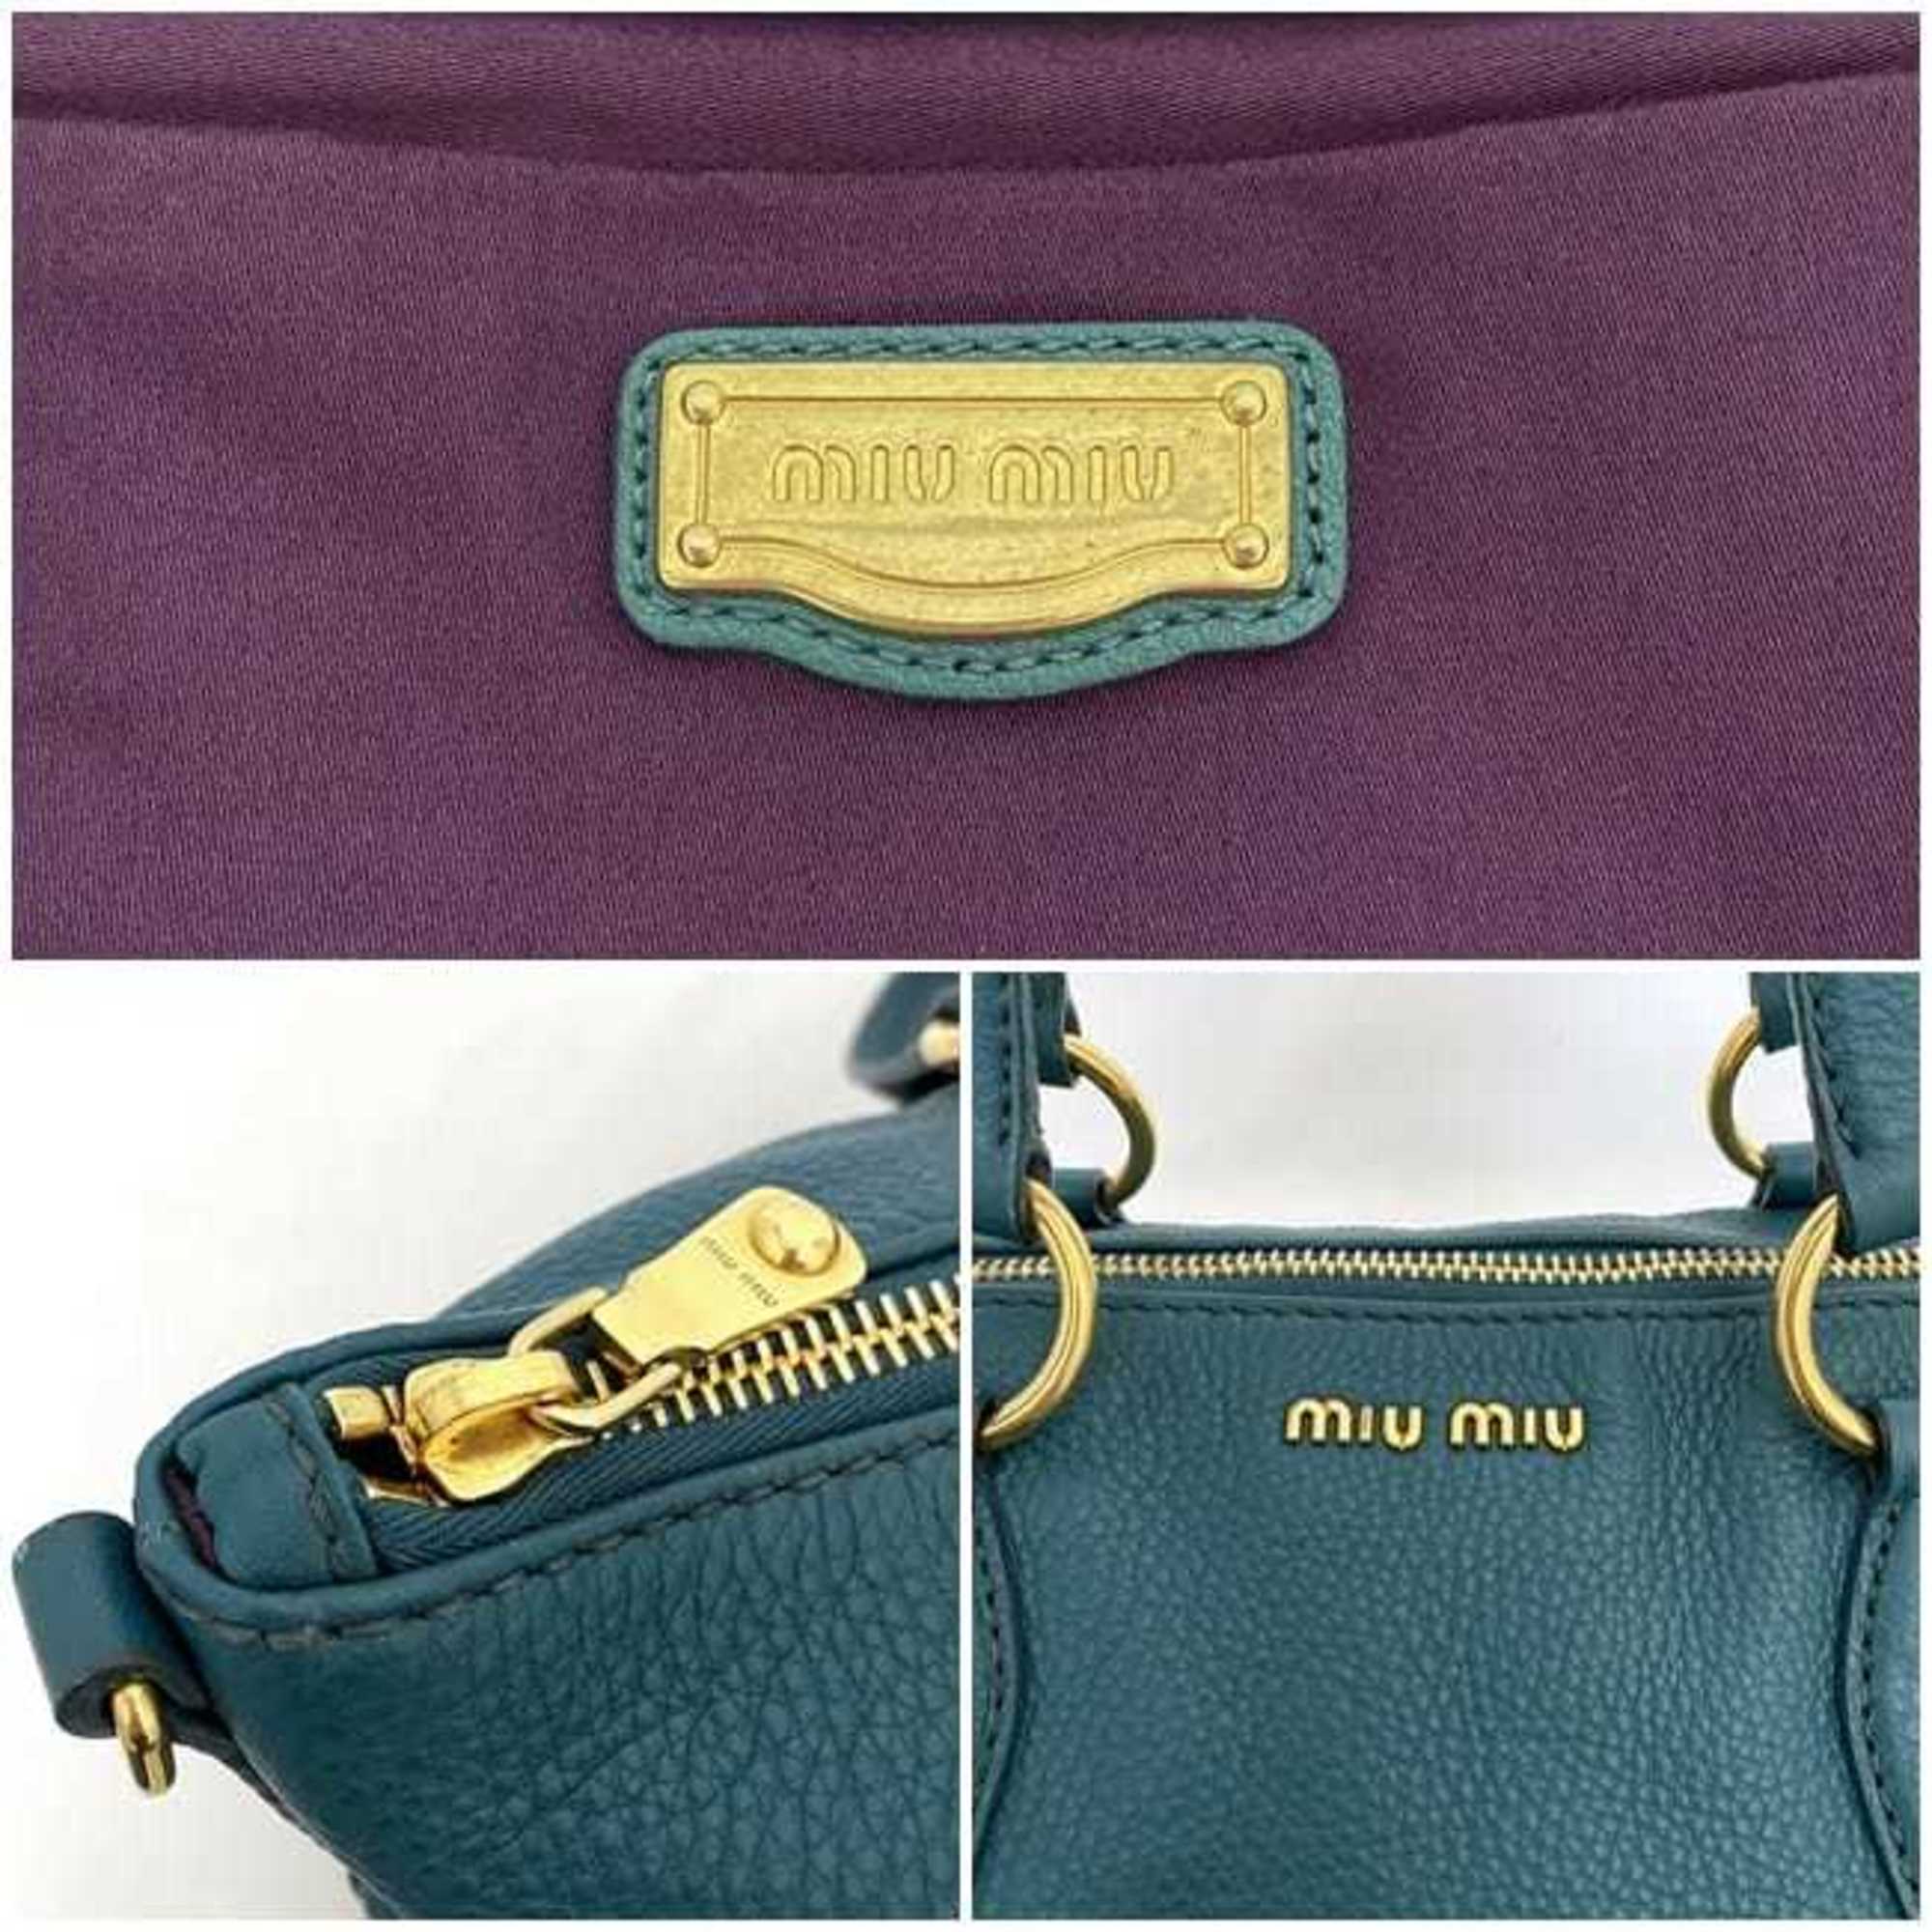 Miu Miu Miu 2way bag green gold leather GP miu tote shoulder ladies